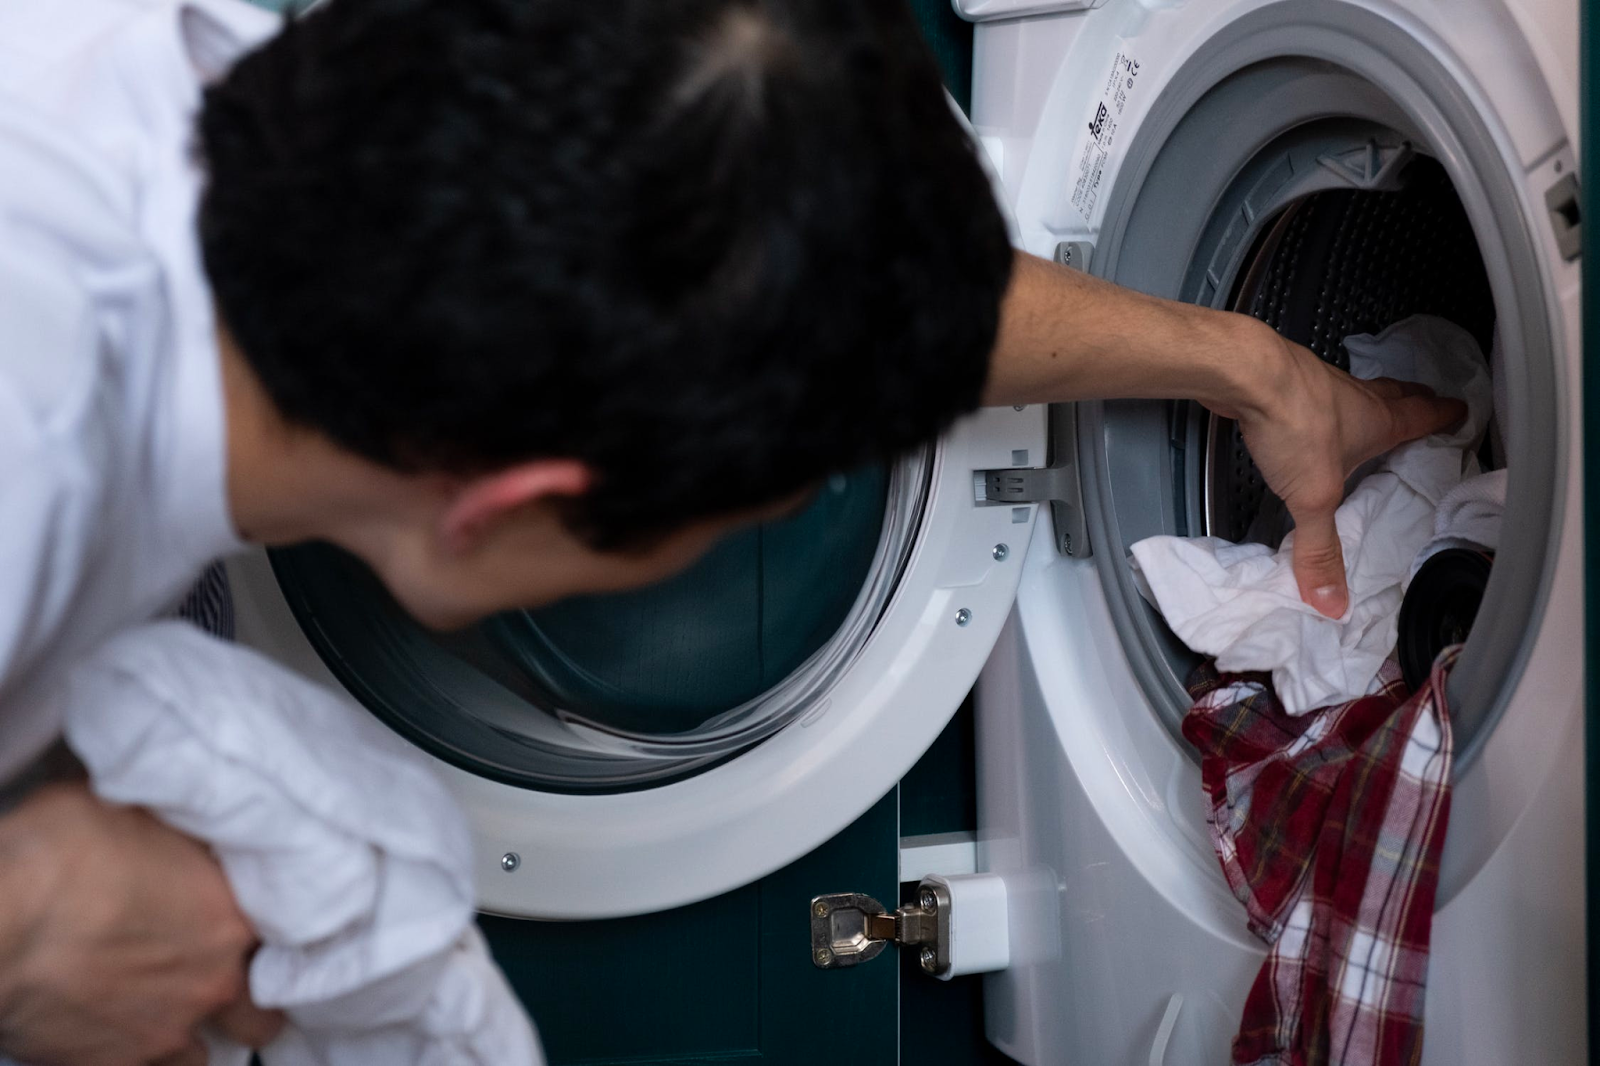 Man vult wasmachine met vuile was | Welhof NL